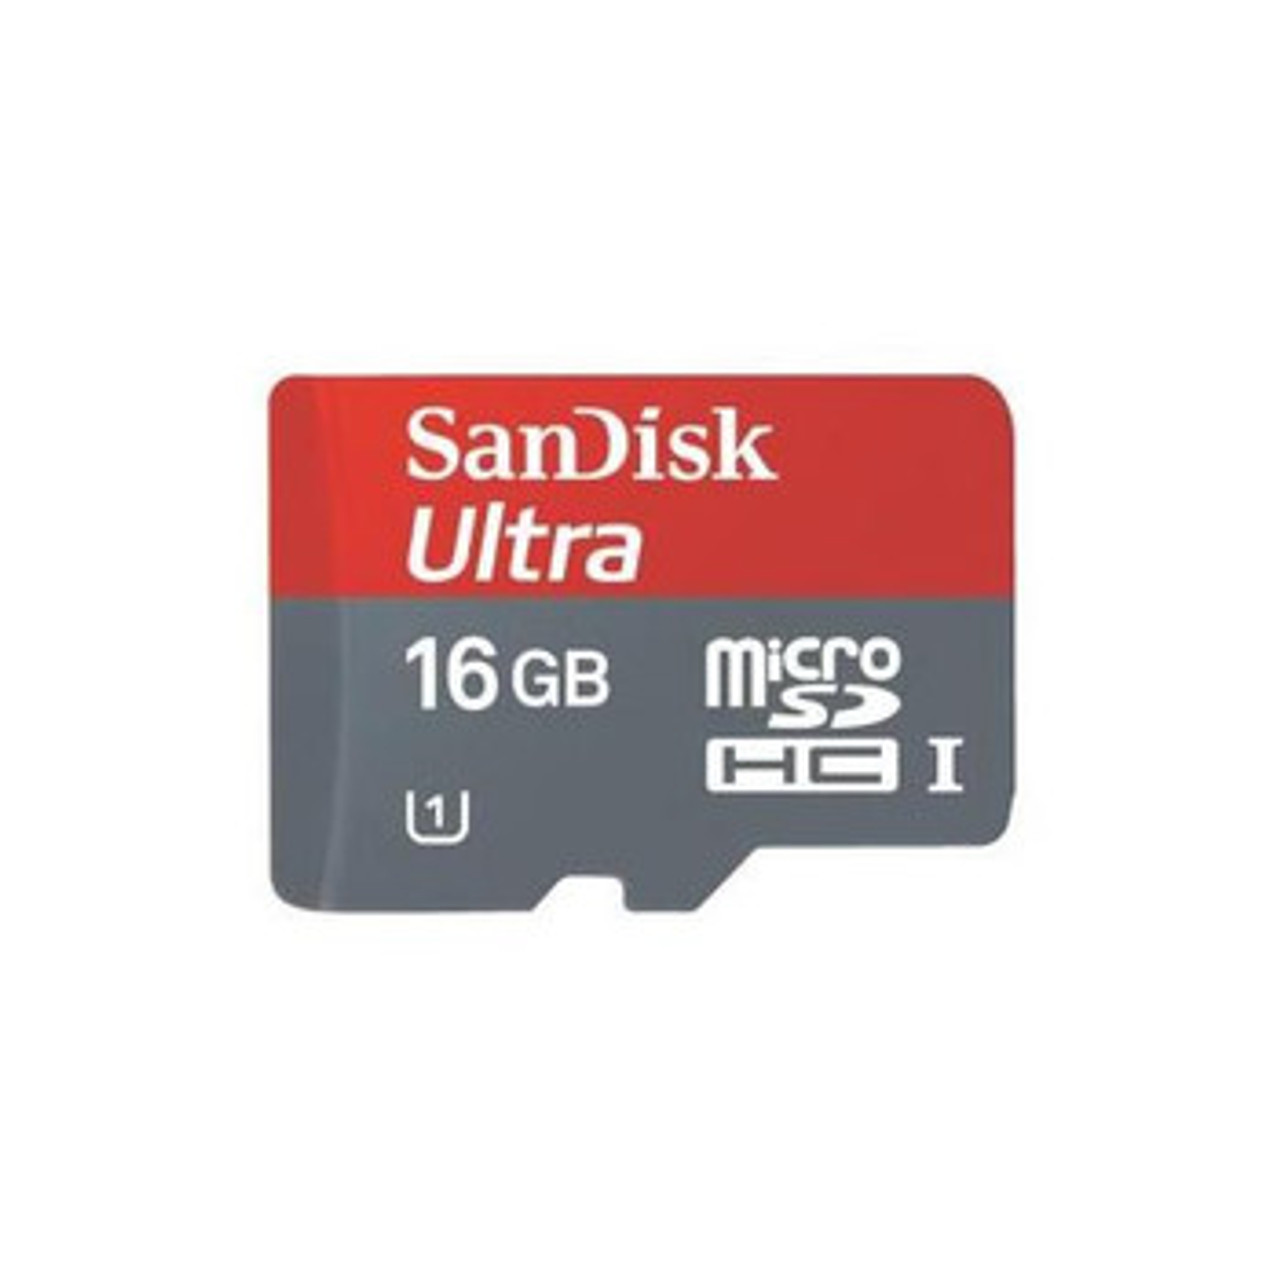 SDSDQUA-016G-A46A-C3 | Sandisk | Ultra 16Gb Class 10 Microsdhc Uhs-I Flash Memory Card